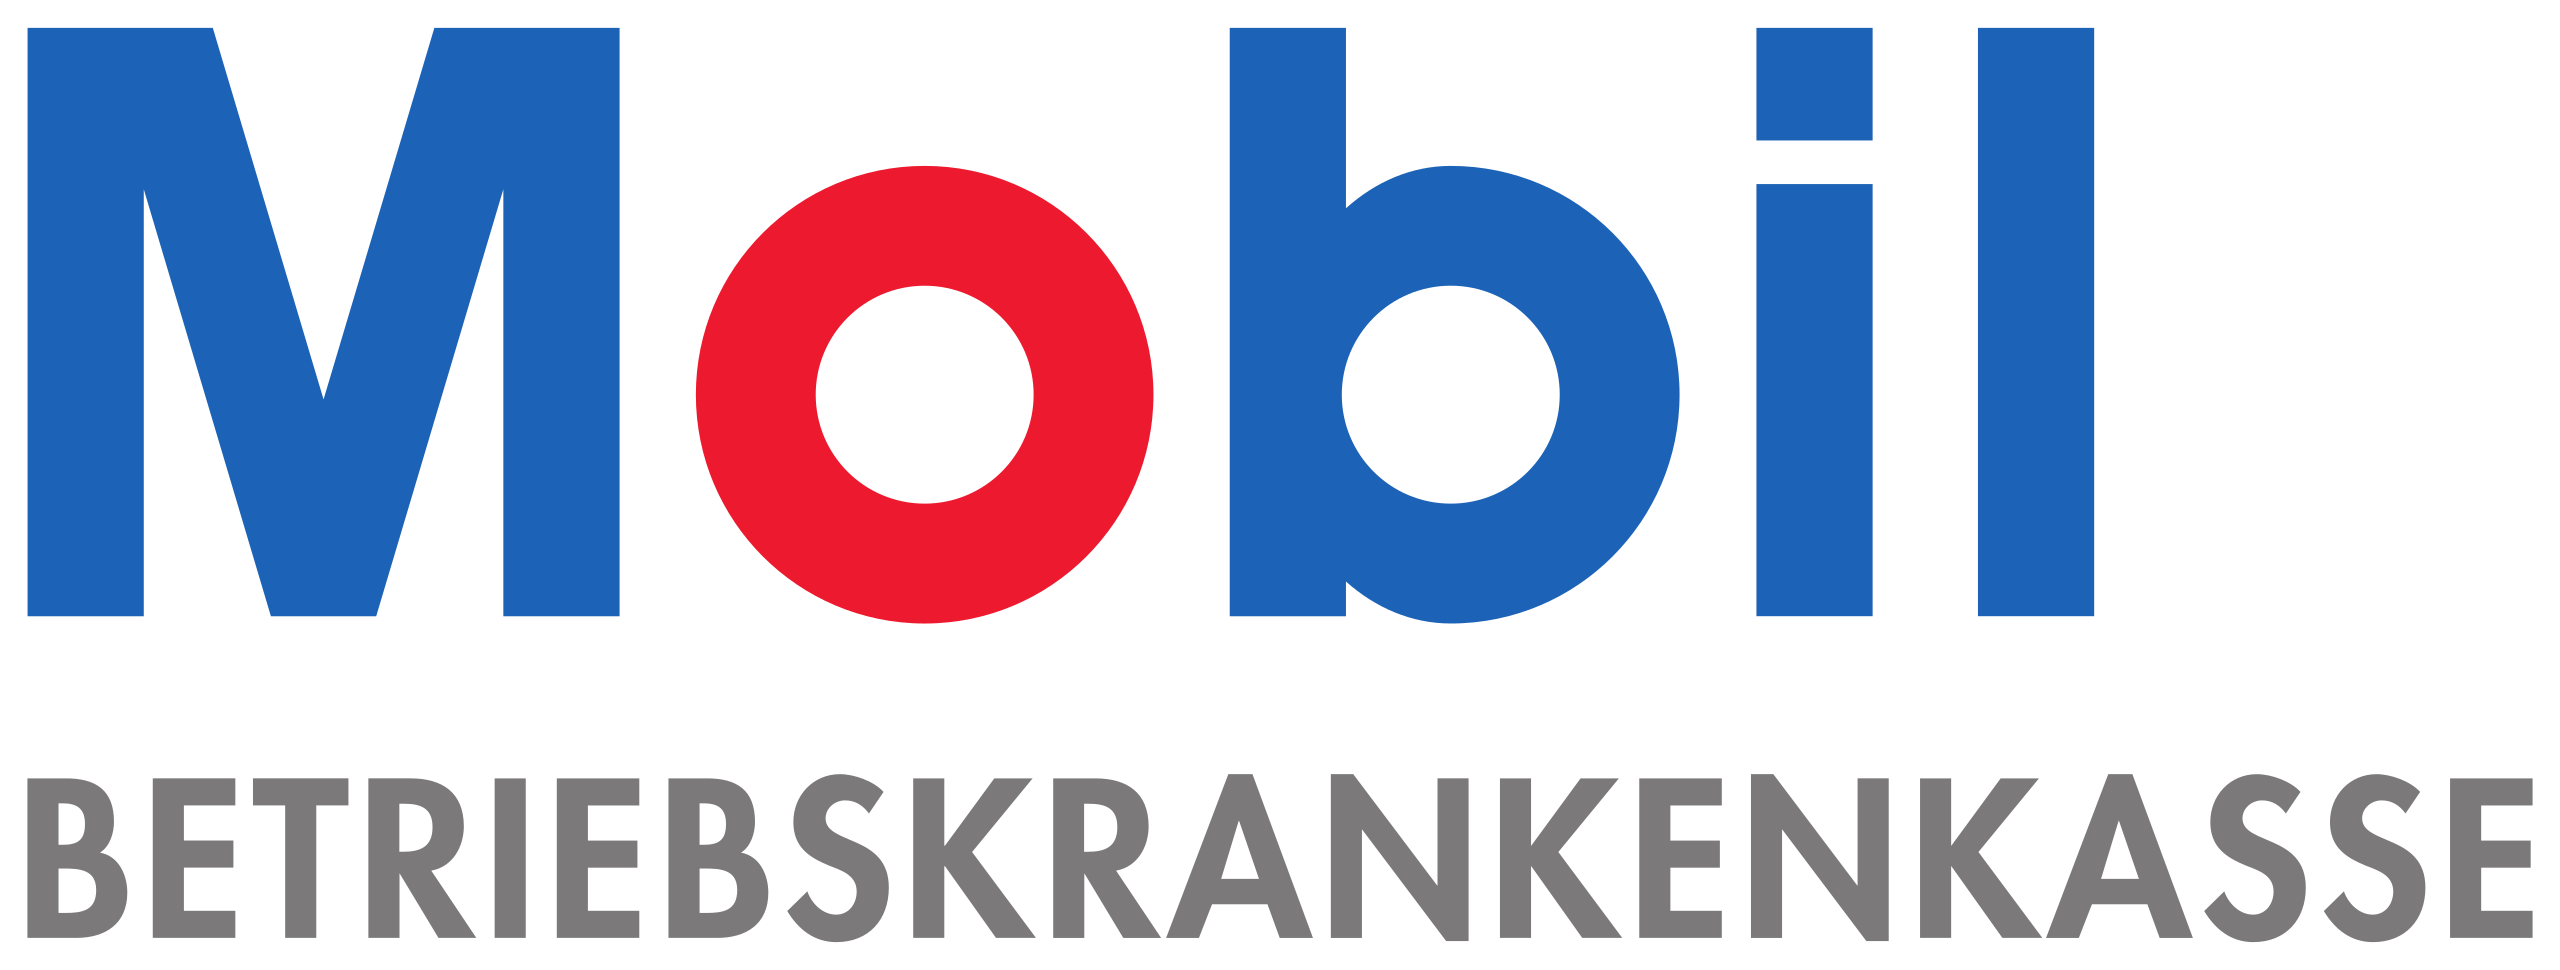 Betriebskrankenkasse Mobil Pflegegrad beantragen Logo